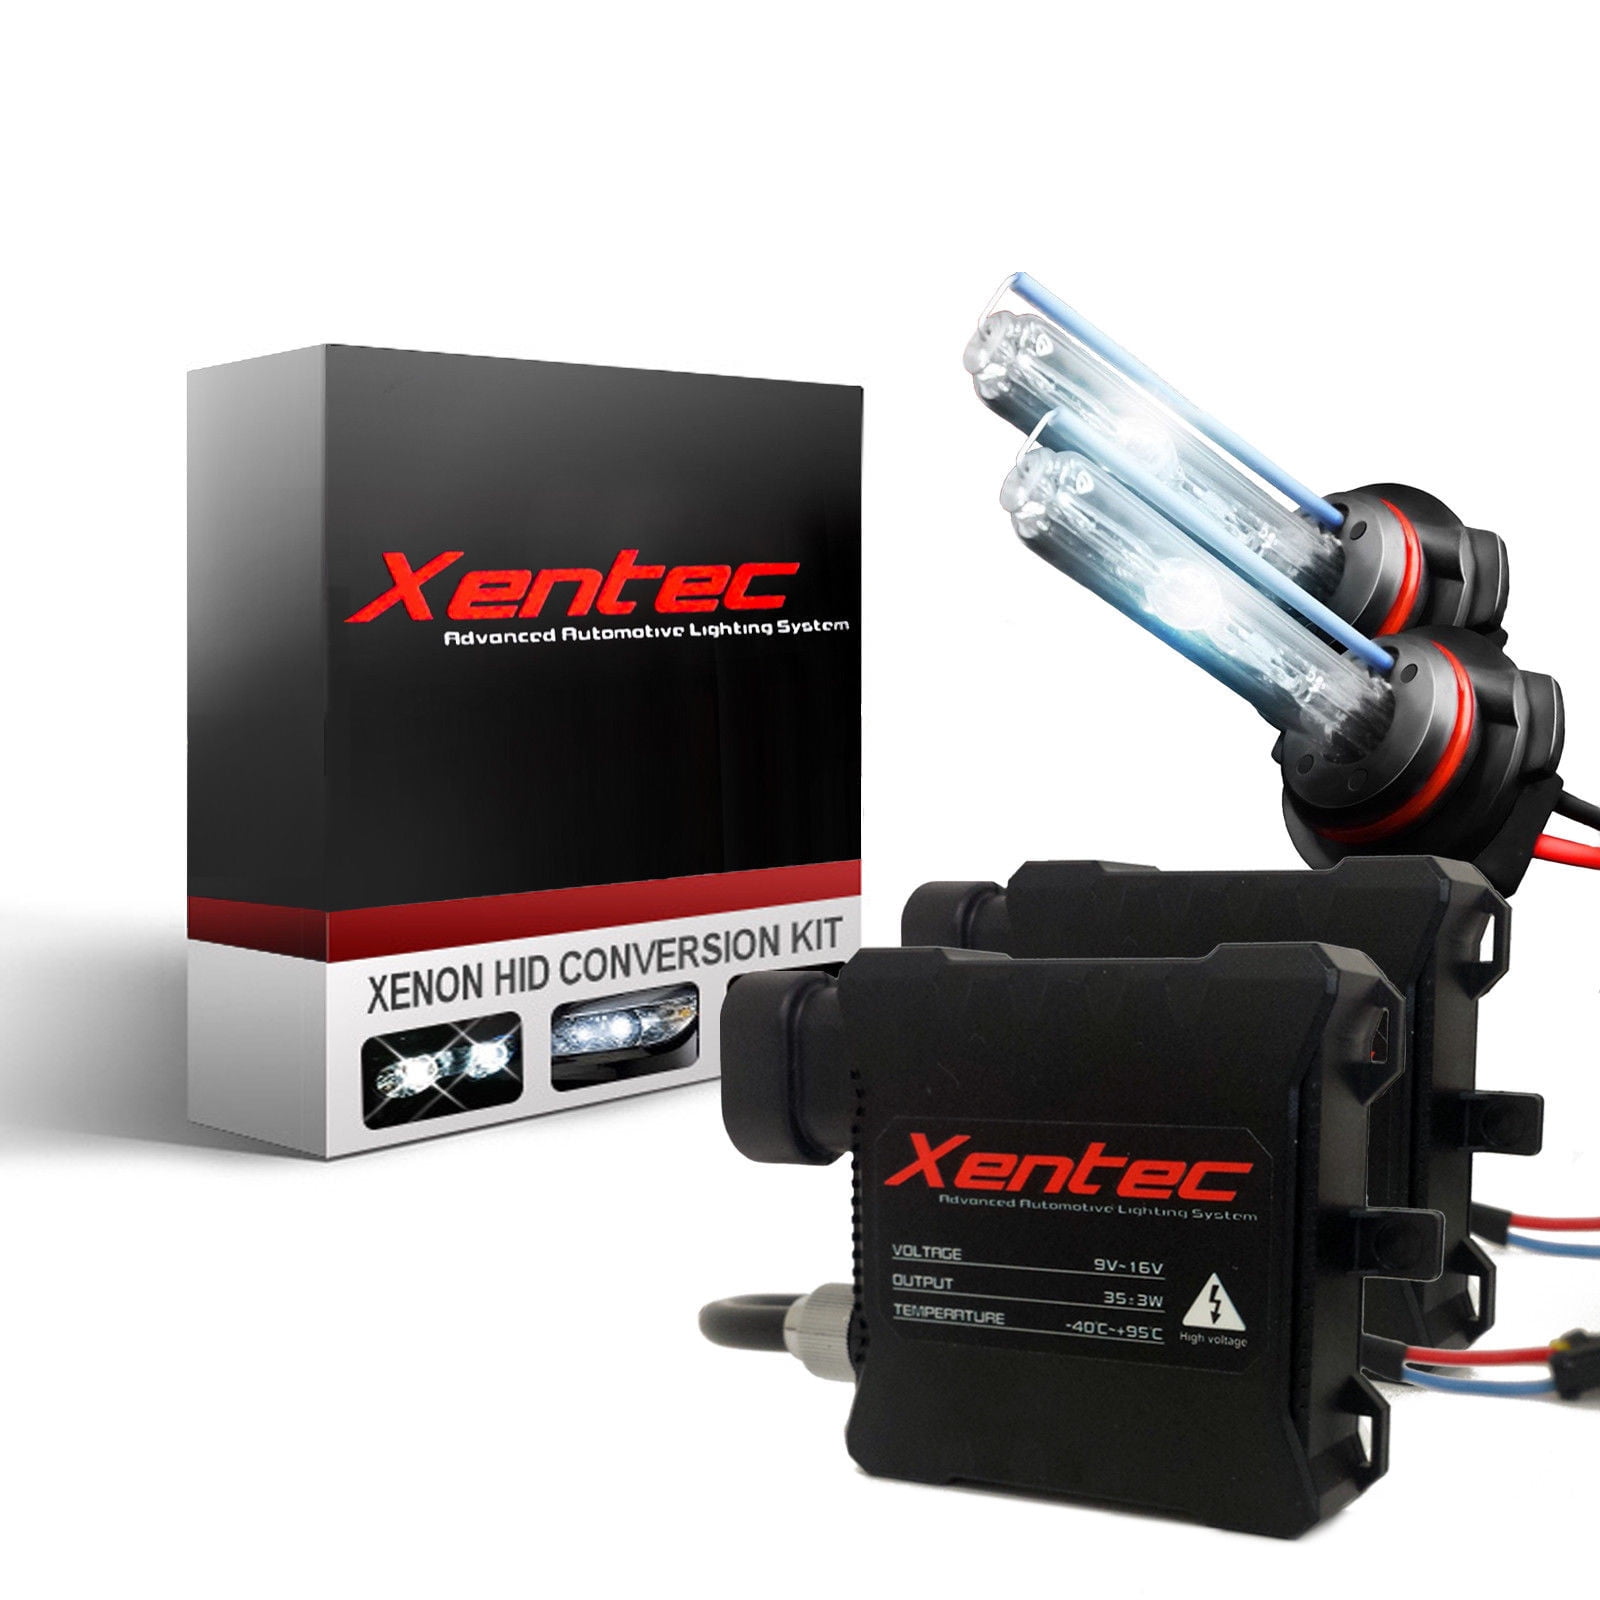 XENTEC LED Headlight Conversion kit H4 9003 6000K for Hyundai Accent 2000-2016